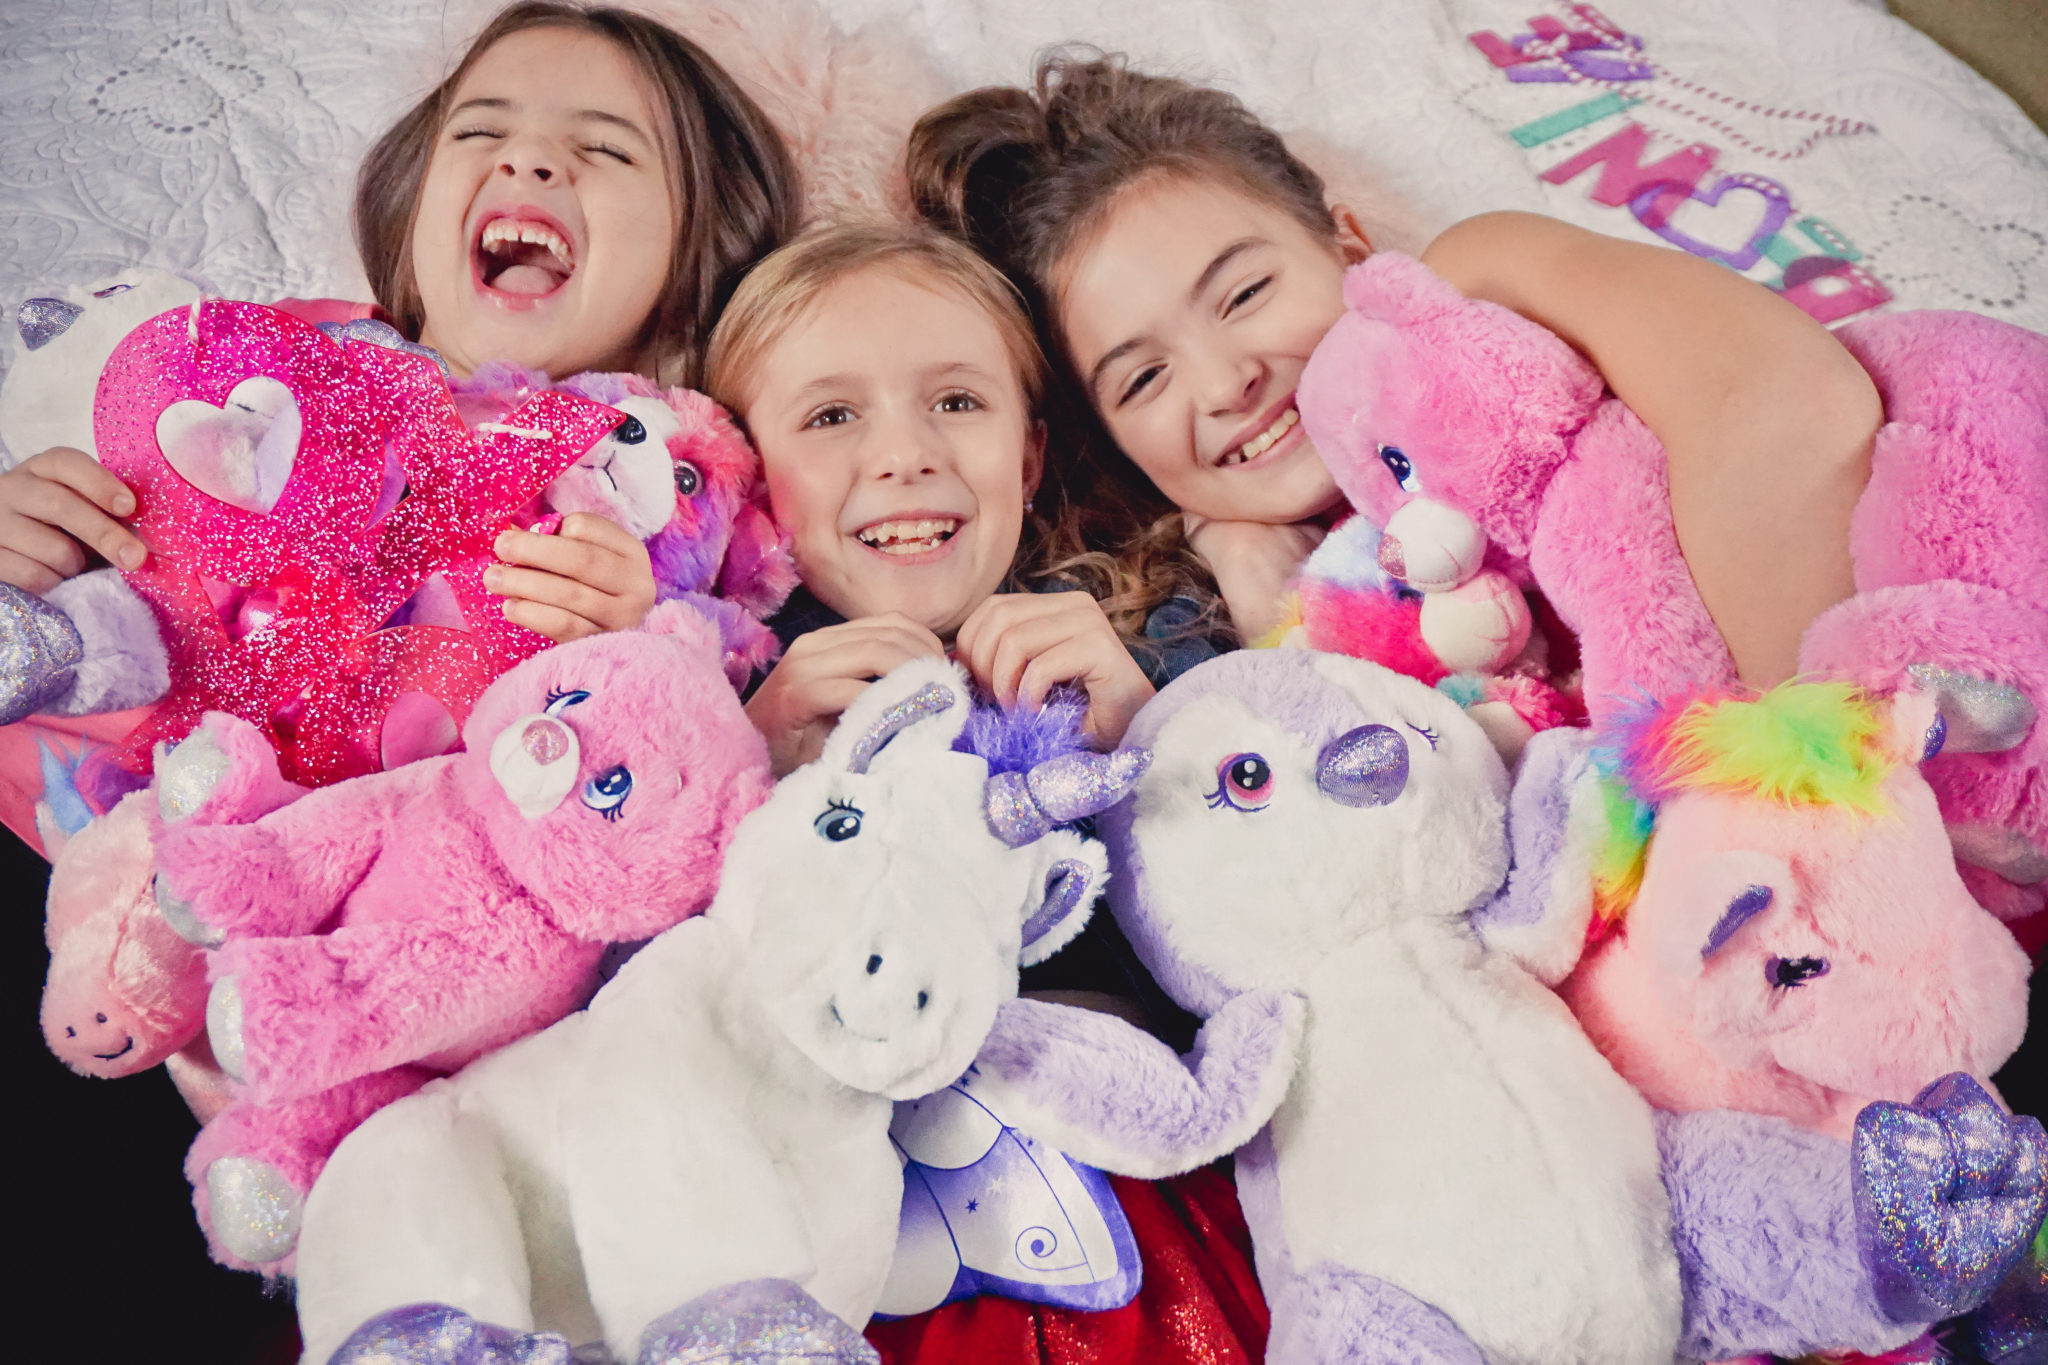 Three girls hugging stuffed plush animals in various pink and purple shades